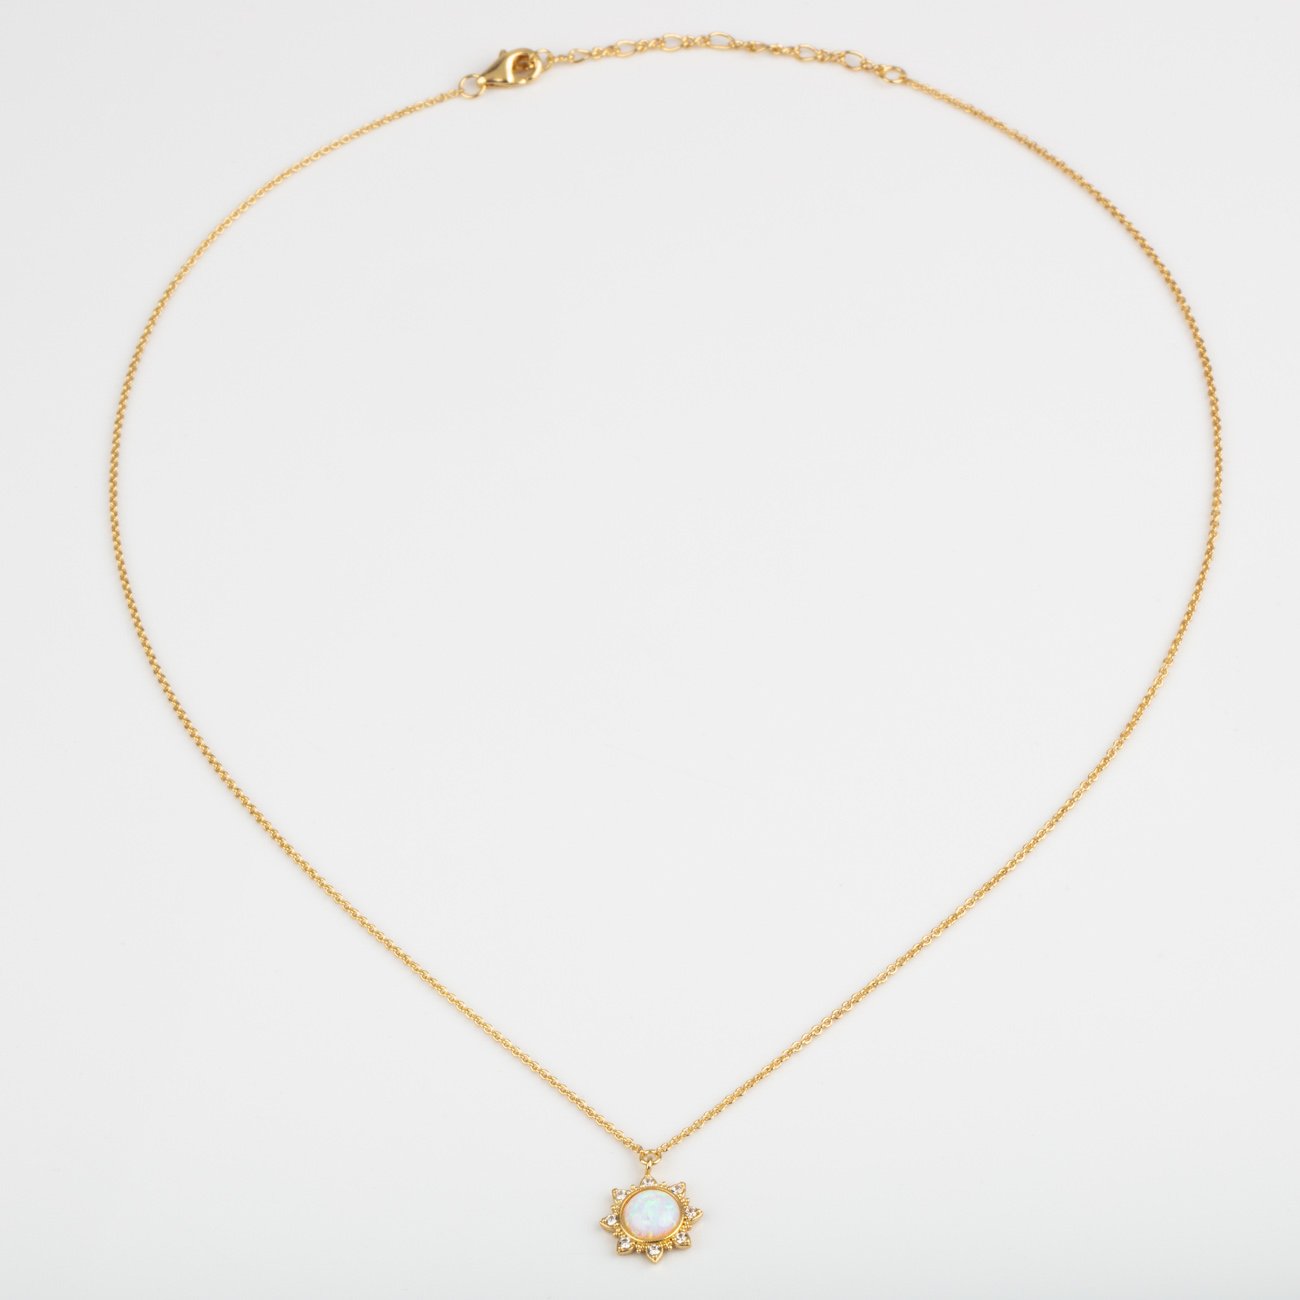 opal necklace, cute opal necklace